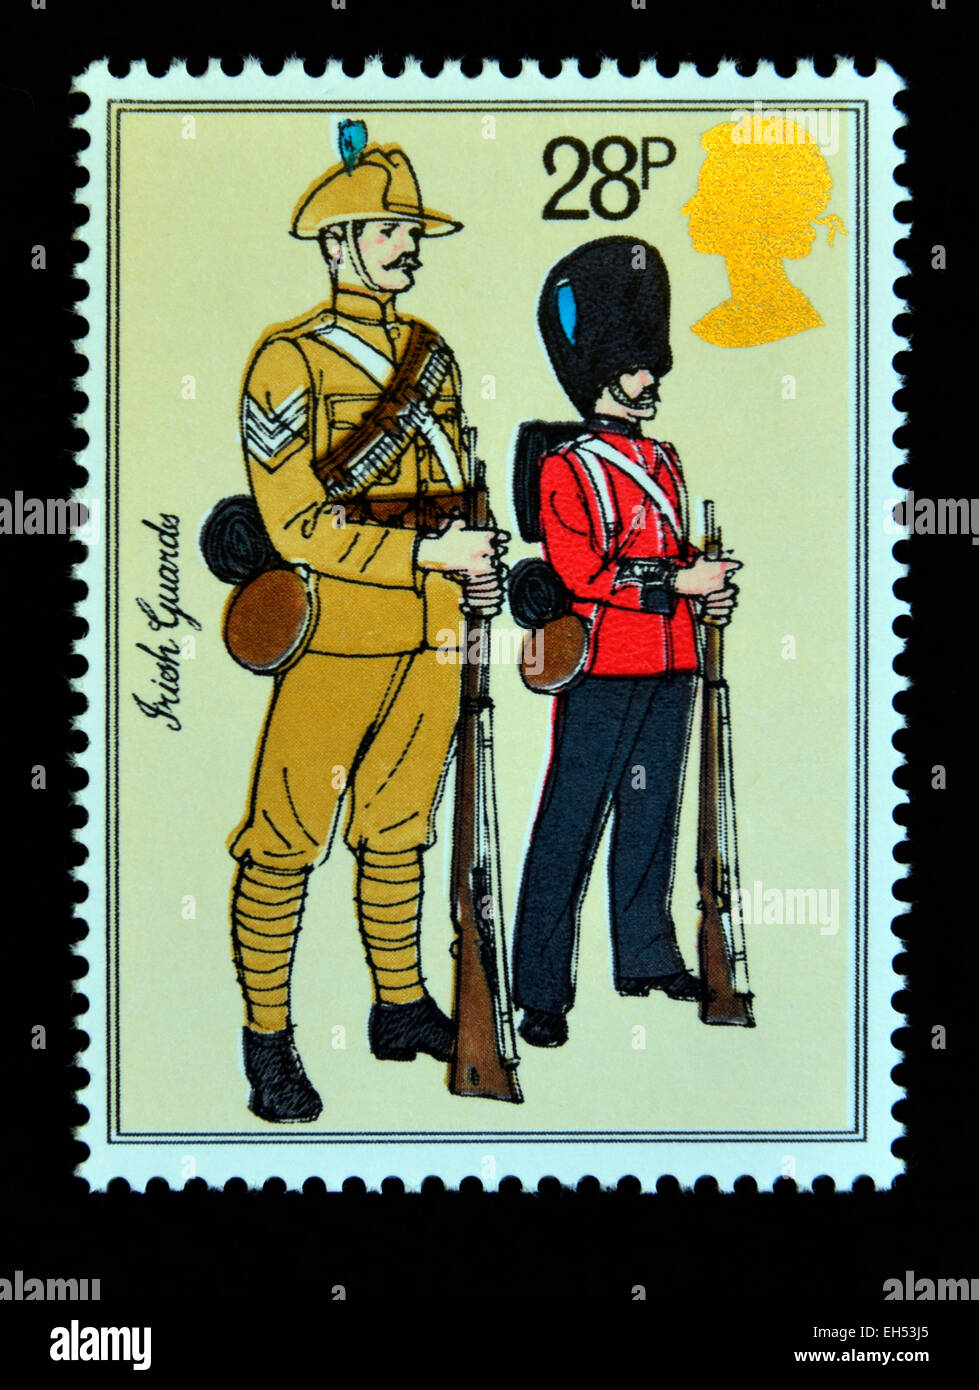 Francobollo. La Gran Bretagna. La regina Elisabetta II. 1983. Esercito britannico uniformi. Irlandese guardie. 28p. Foto Stock